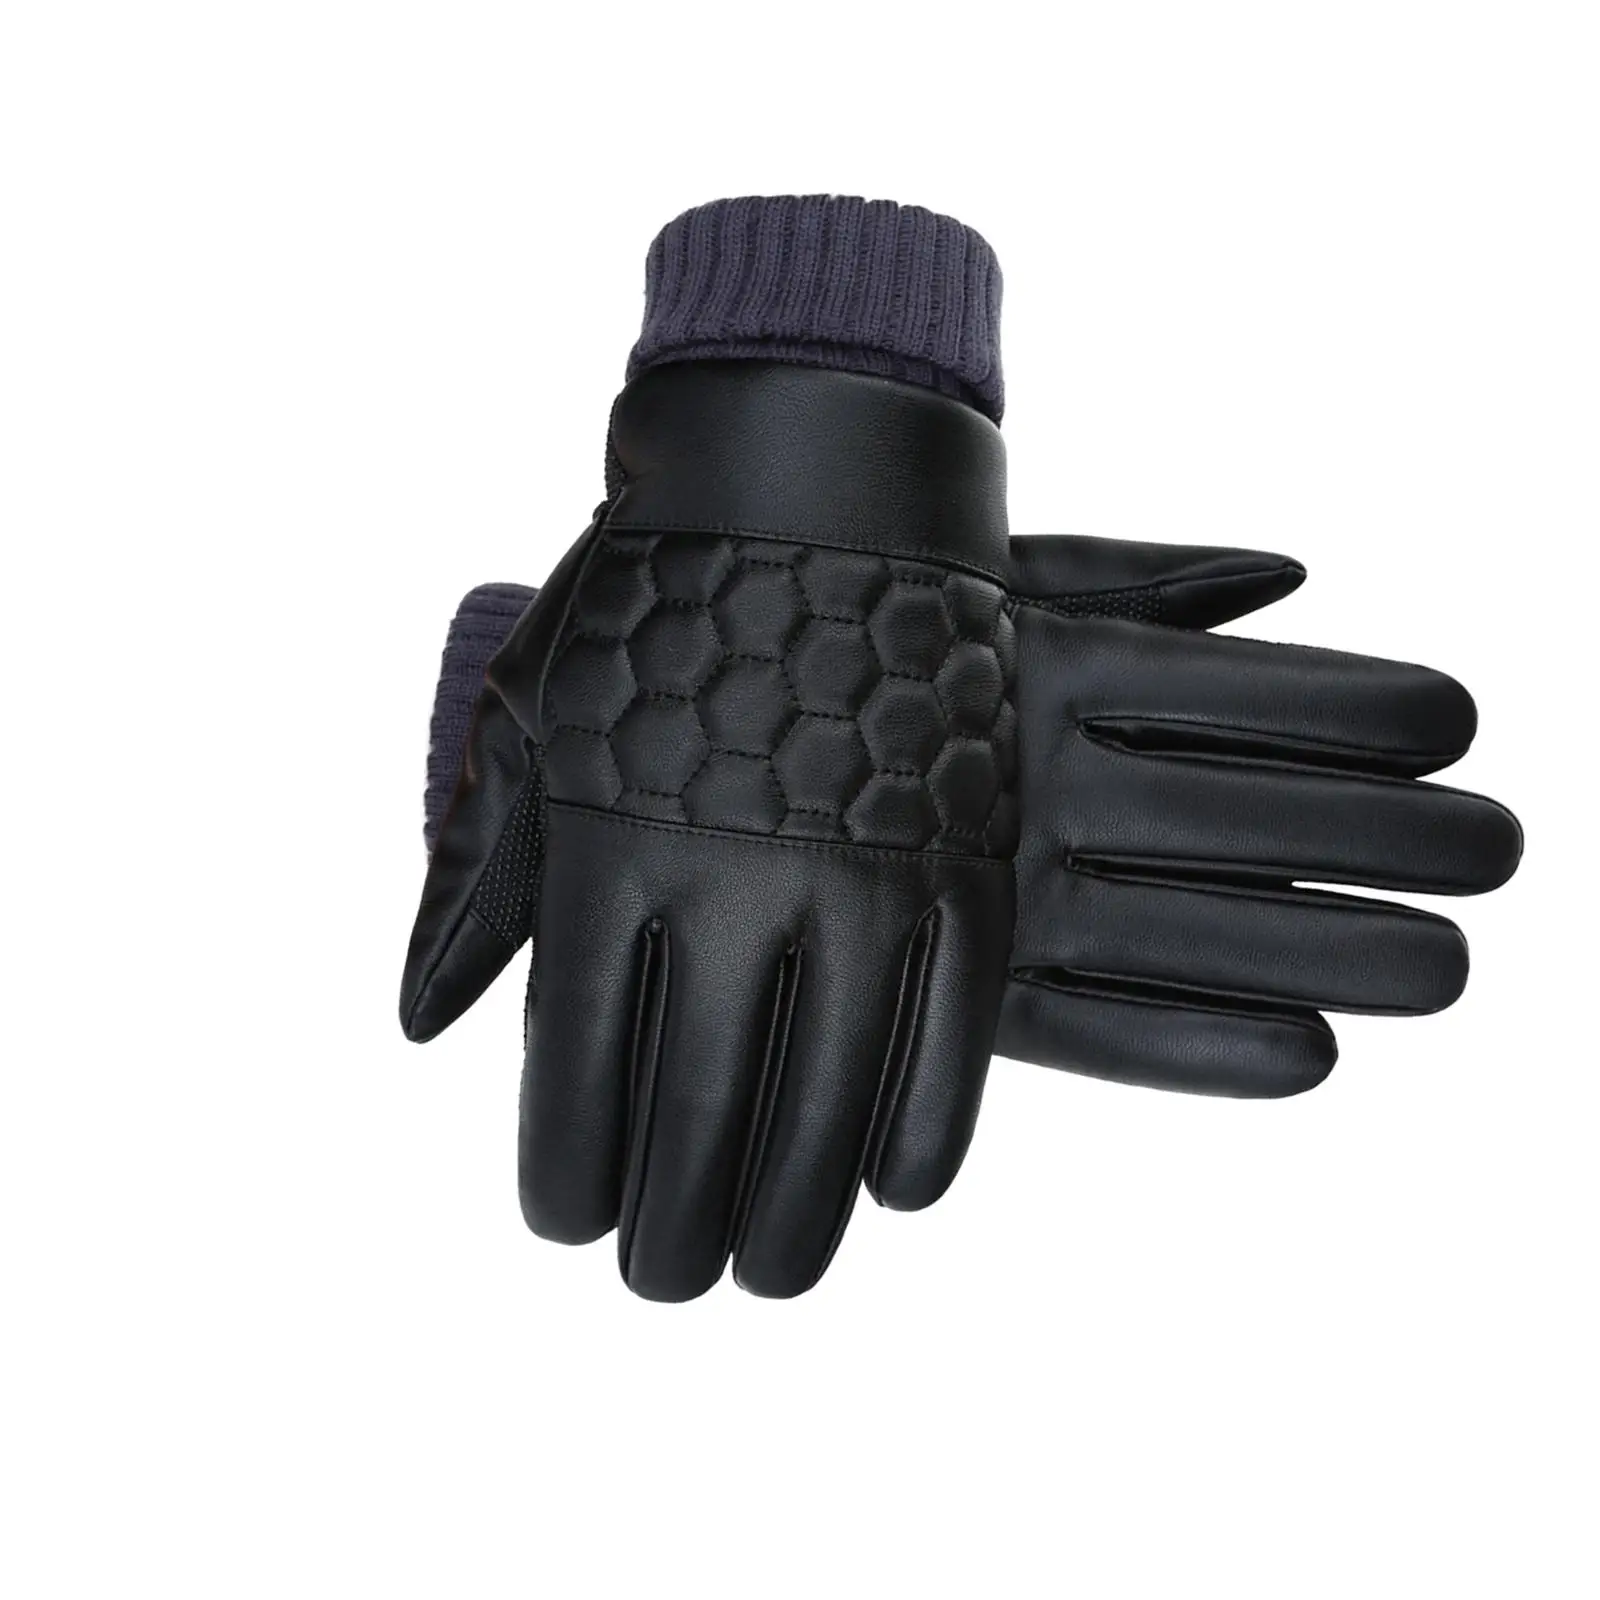 Winter Gloves Wear Resistant Soft Non Slip Touchscreen Warm Gloves for Women Men Running Motorcycle Climbing Outdoor Sports